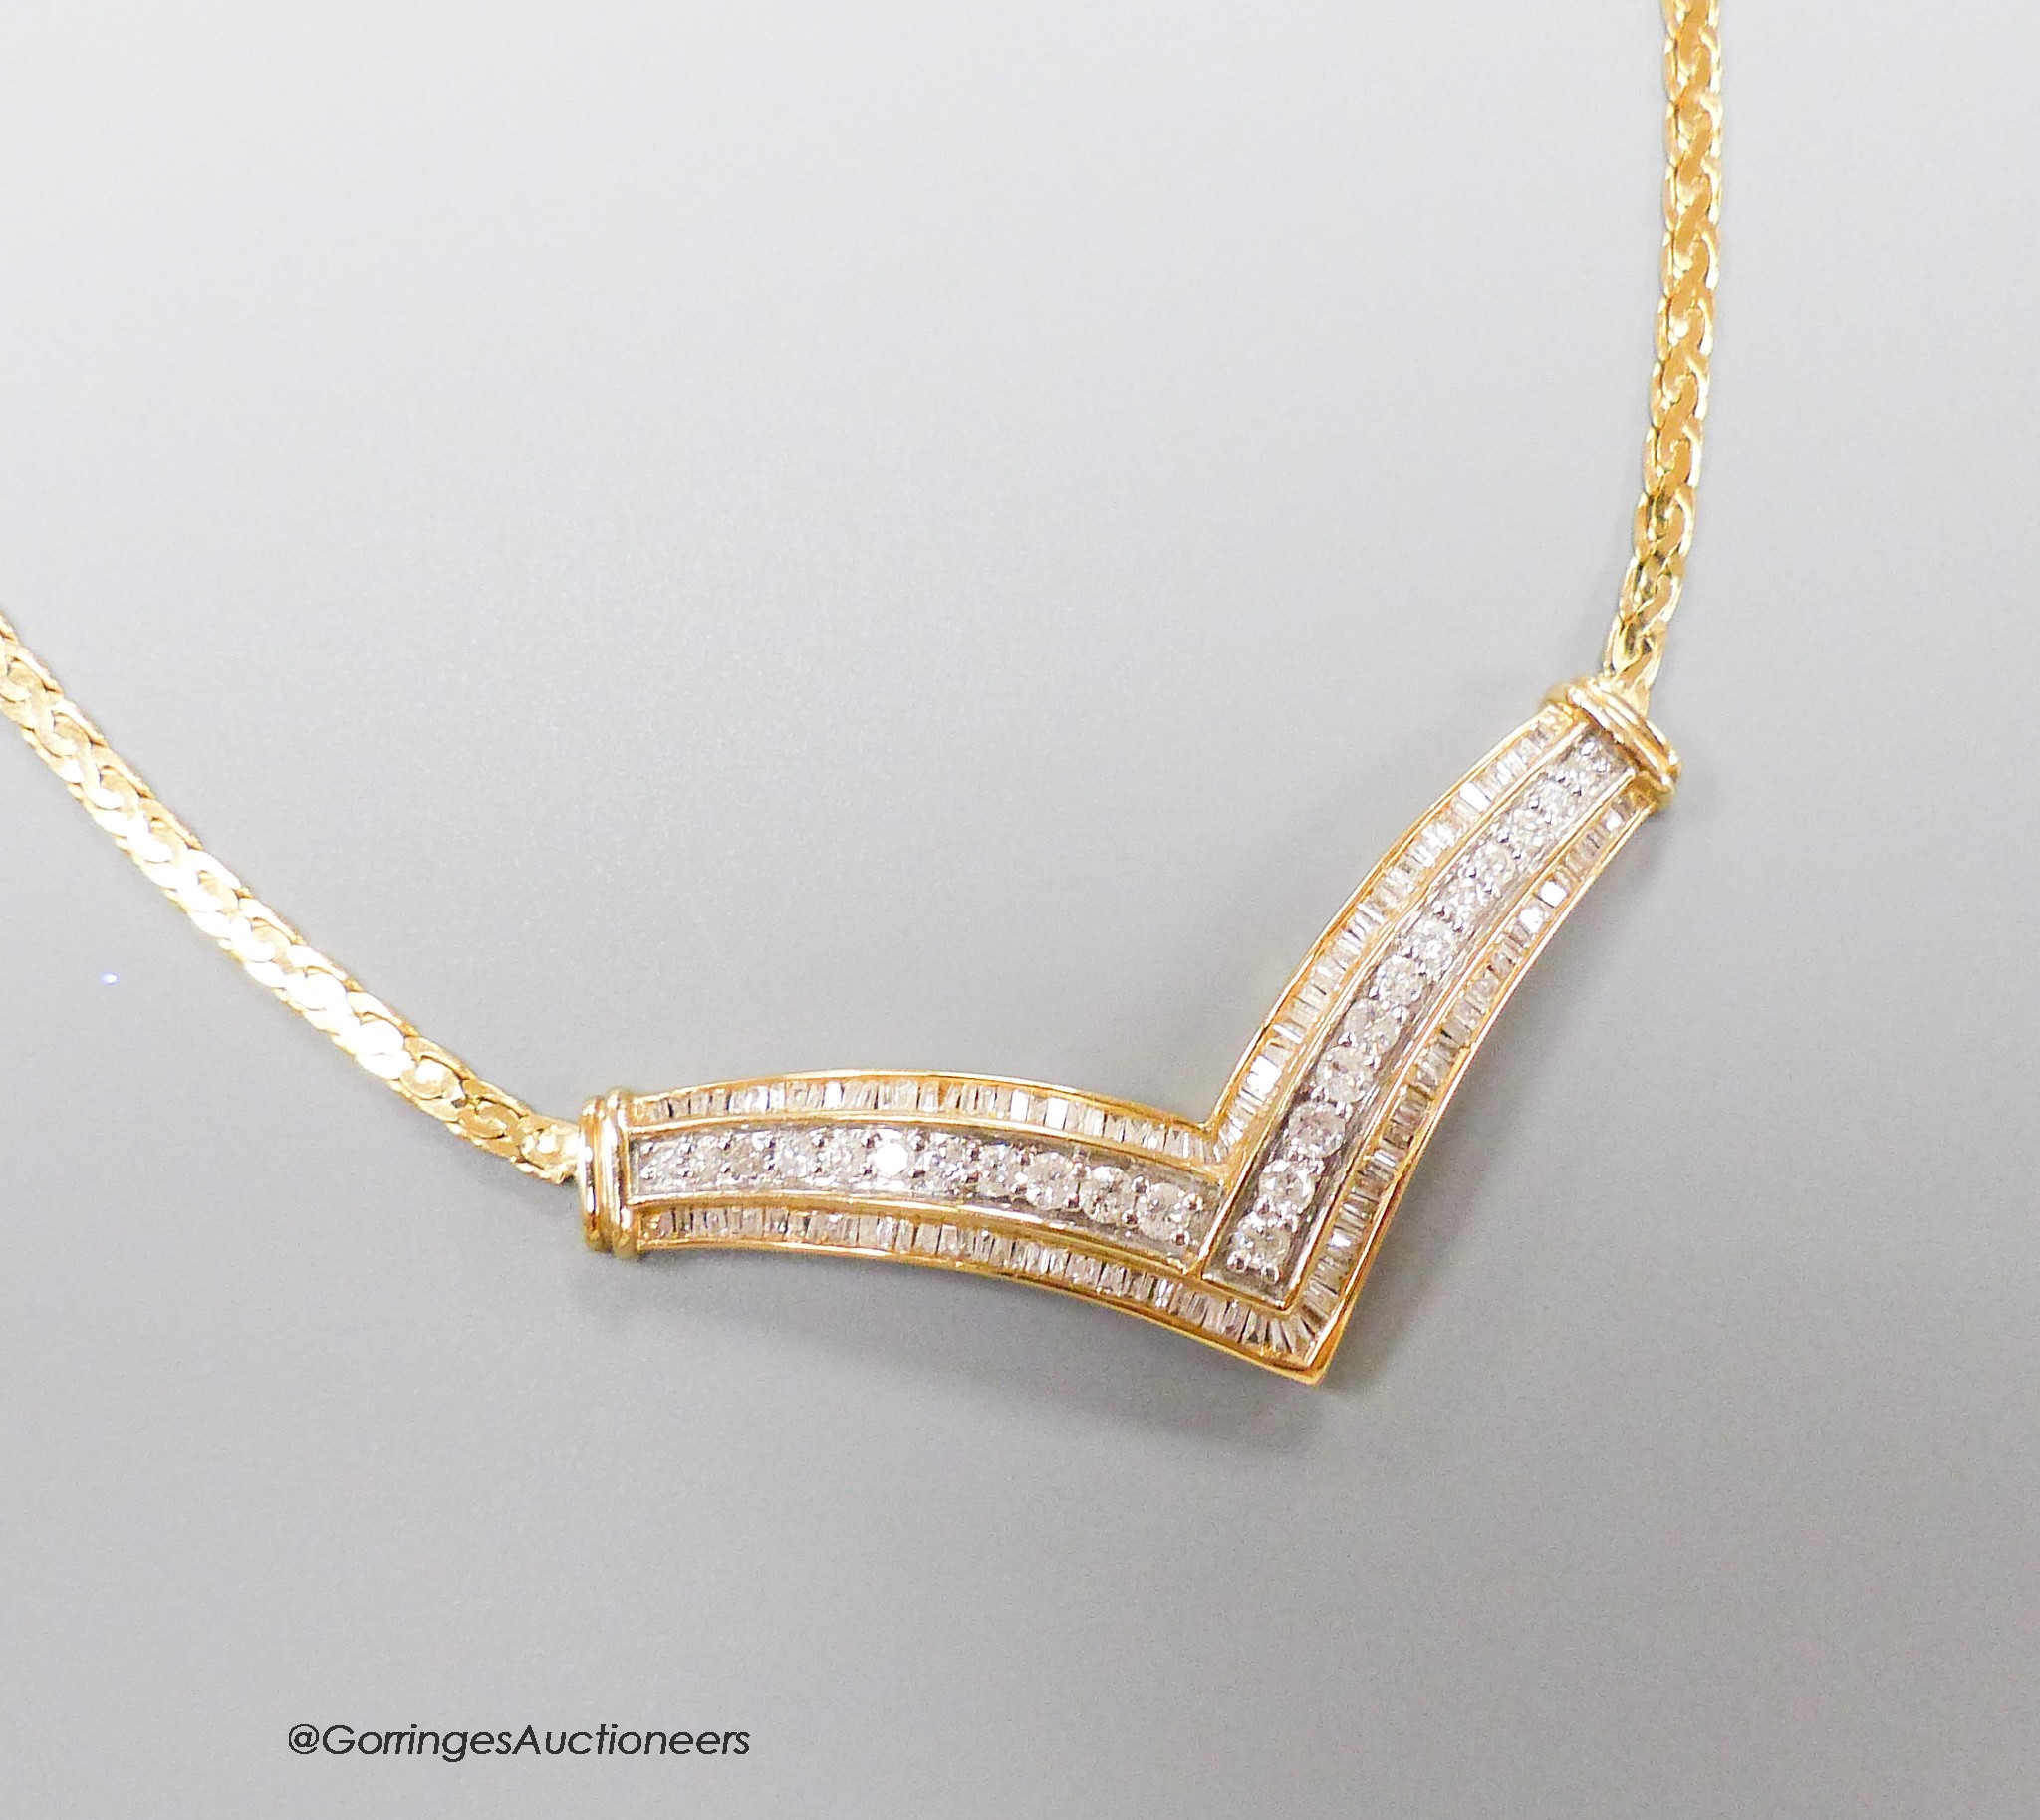 A 10k yellow metal diamond set 'herringbone' necklet, on a 14k yellow metal chain, gross weight 15.6gms.